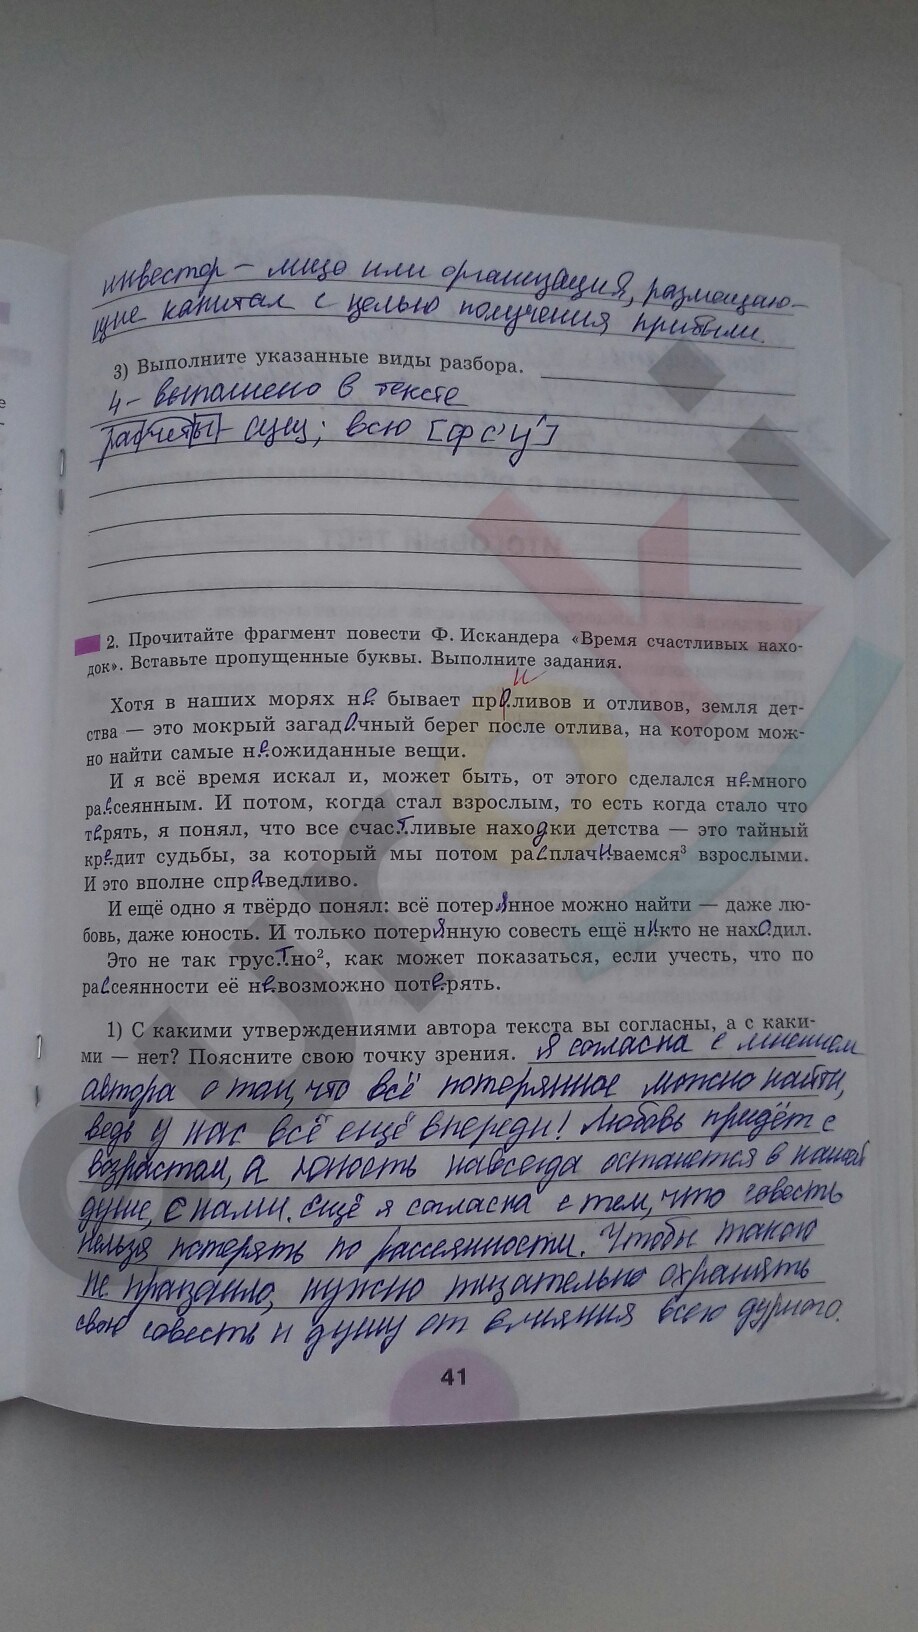 гдз 8 класс рабочая тетрадь часть 2 страница 41 русский язык Рыбченкова, Александрова